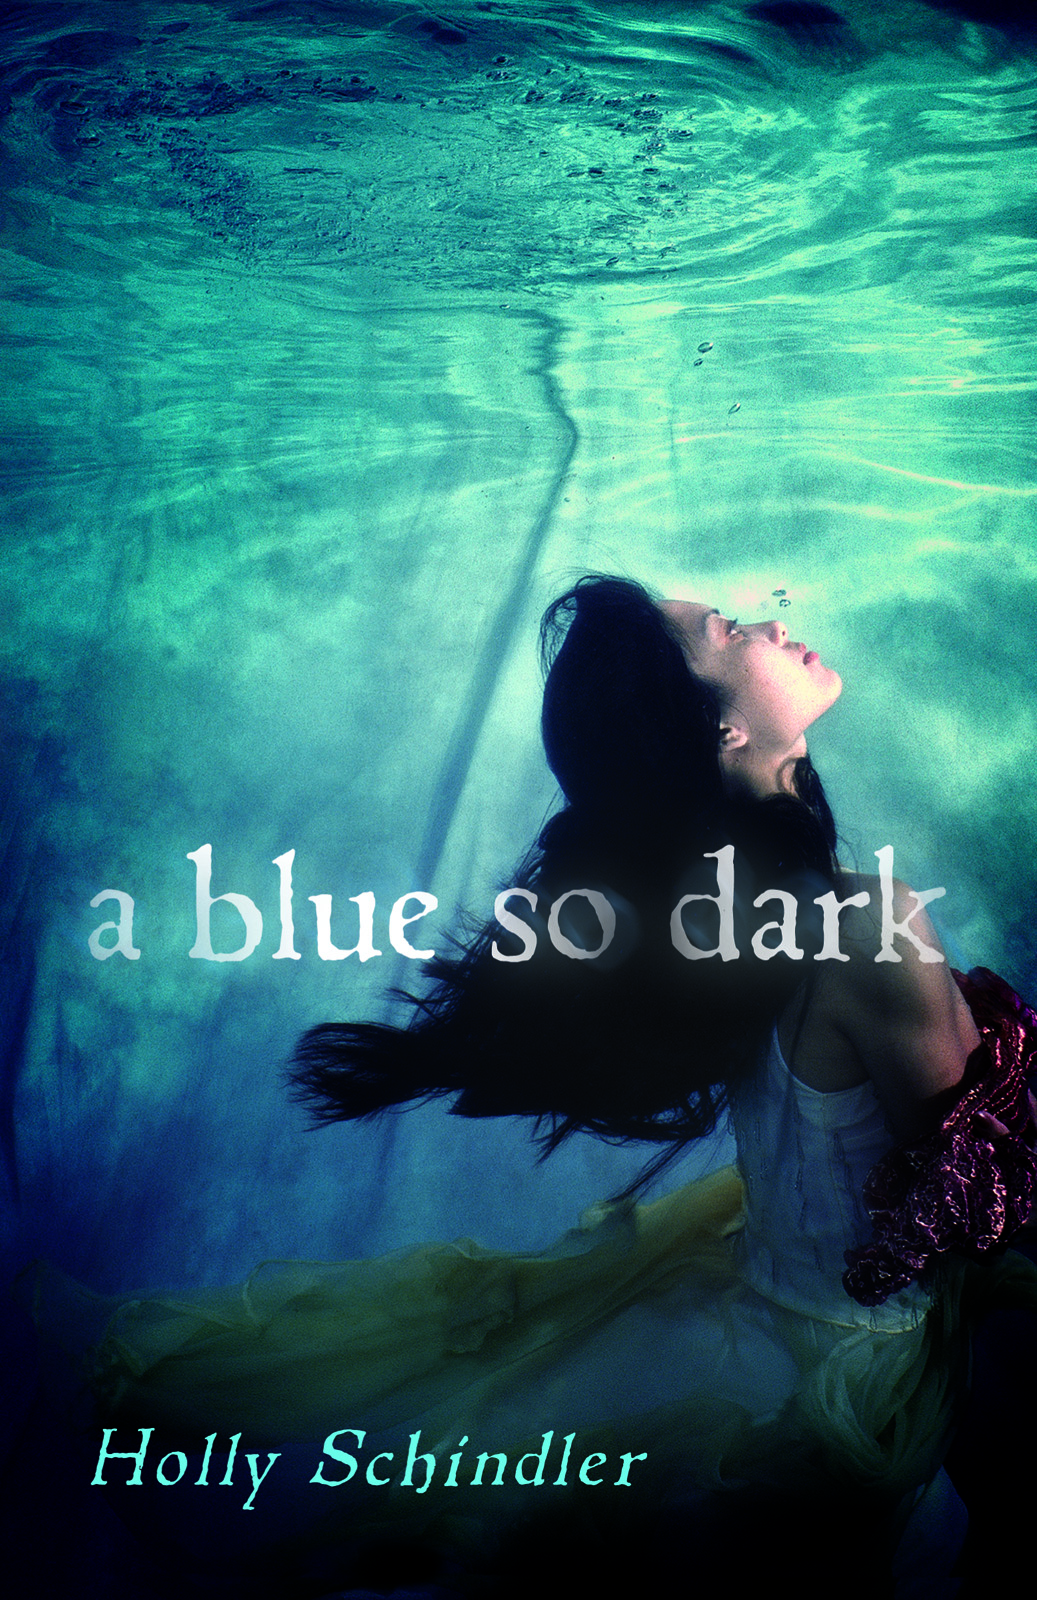 A Blue So Dark by Holly Schindler